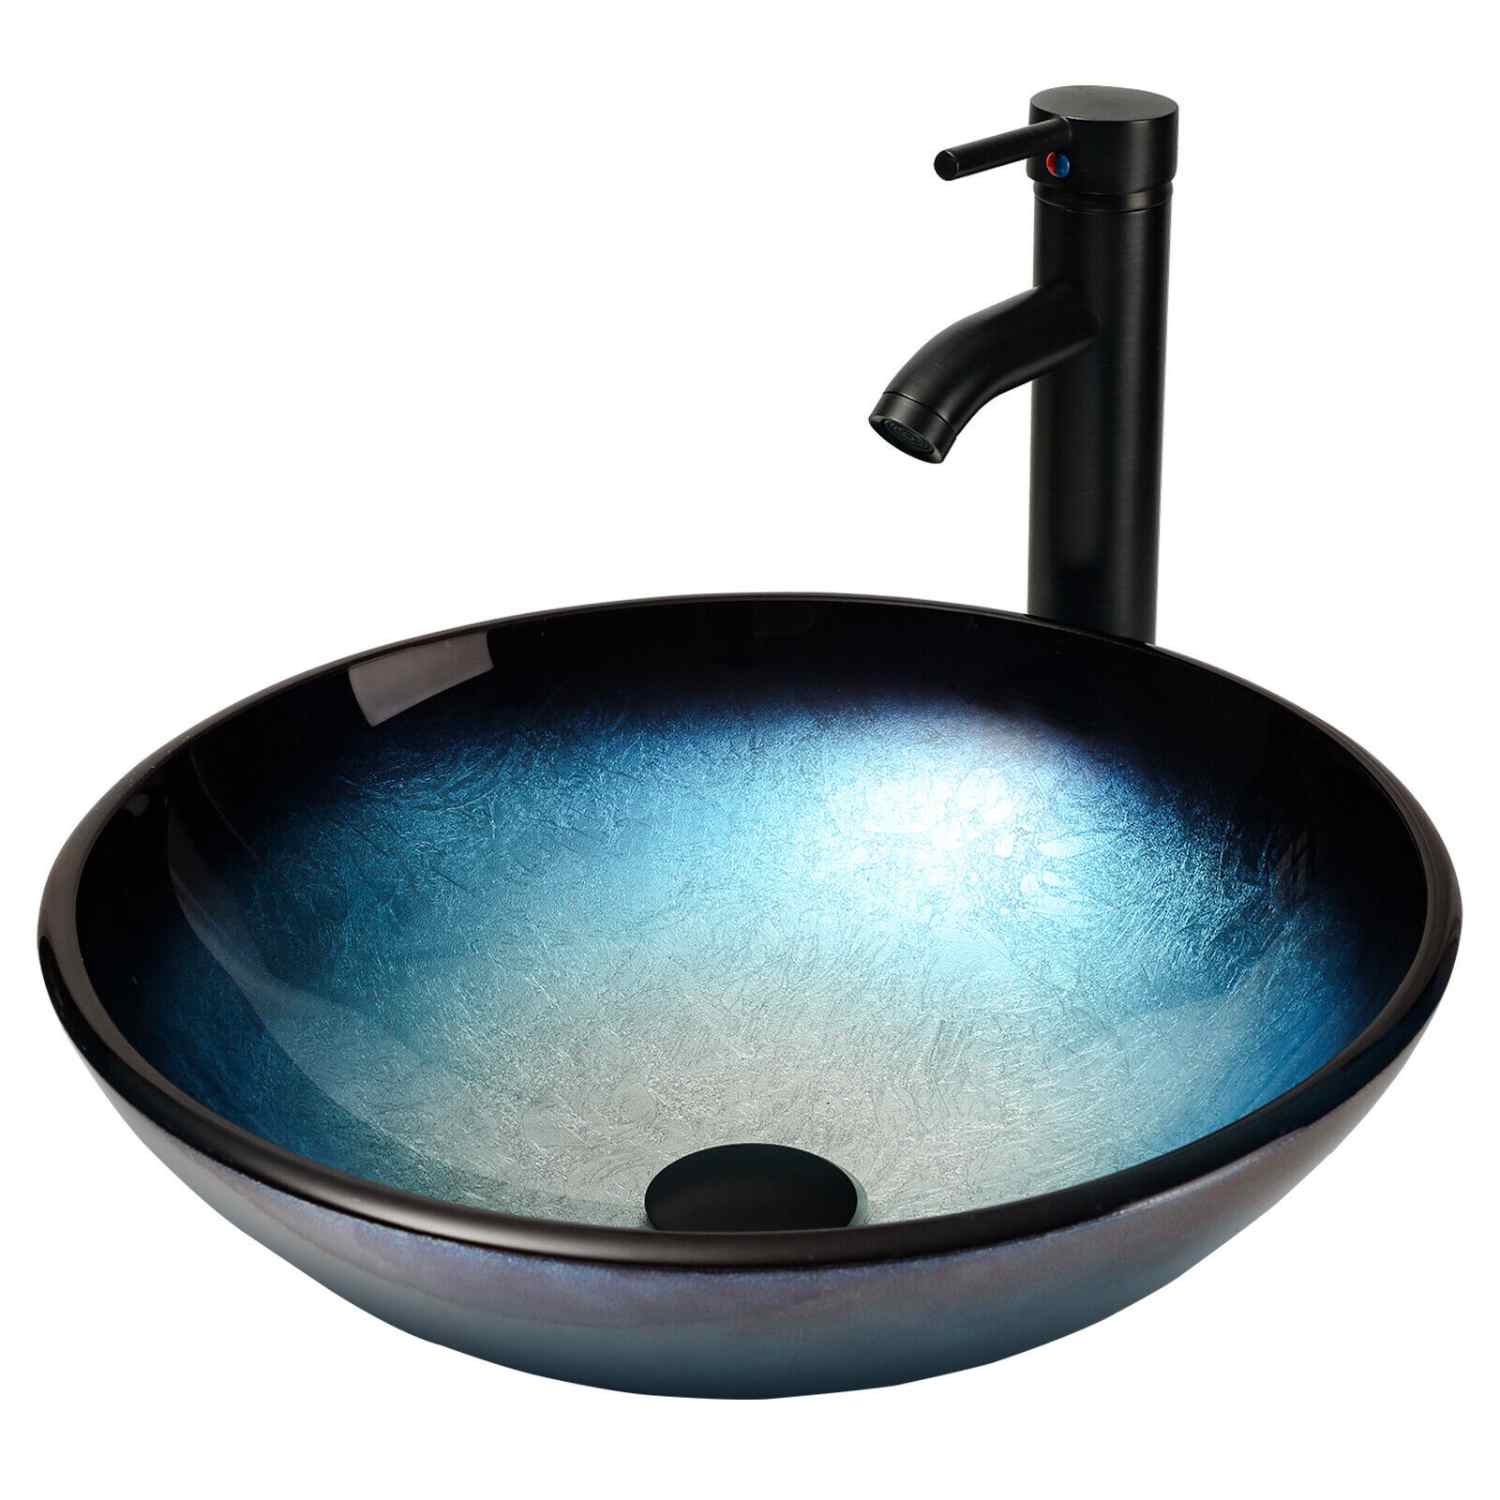 Elecwish shiny blue sink